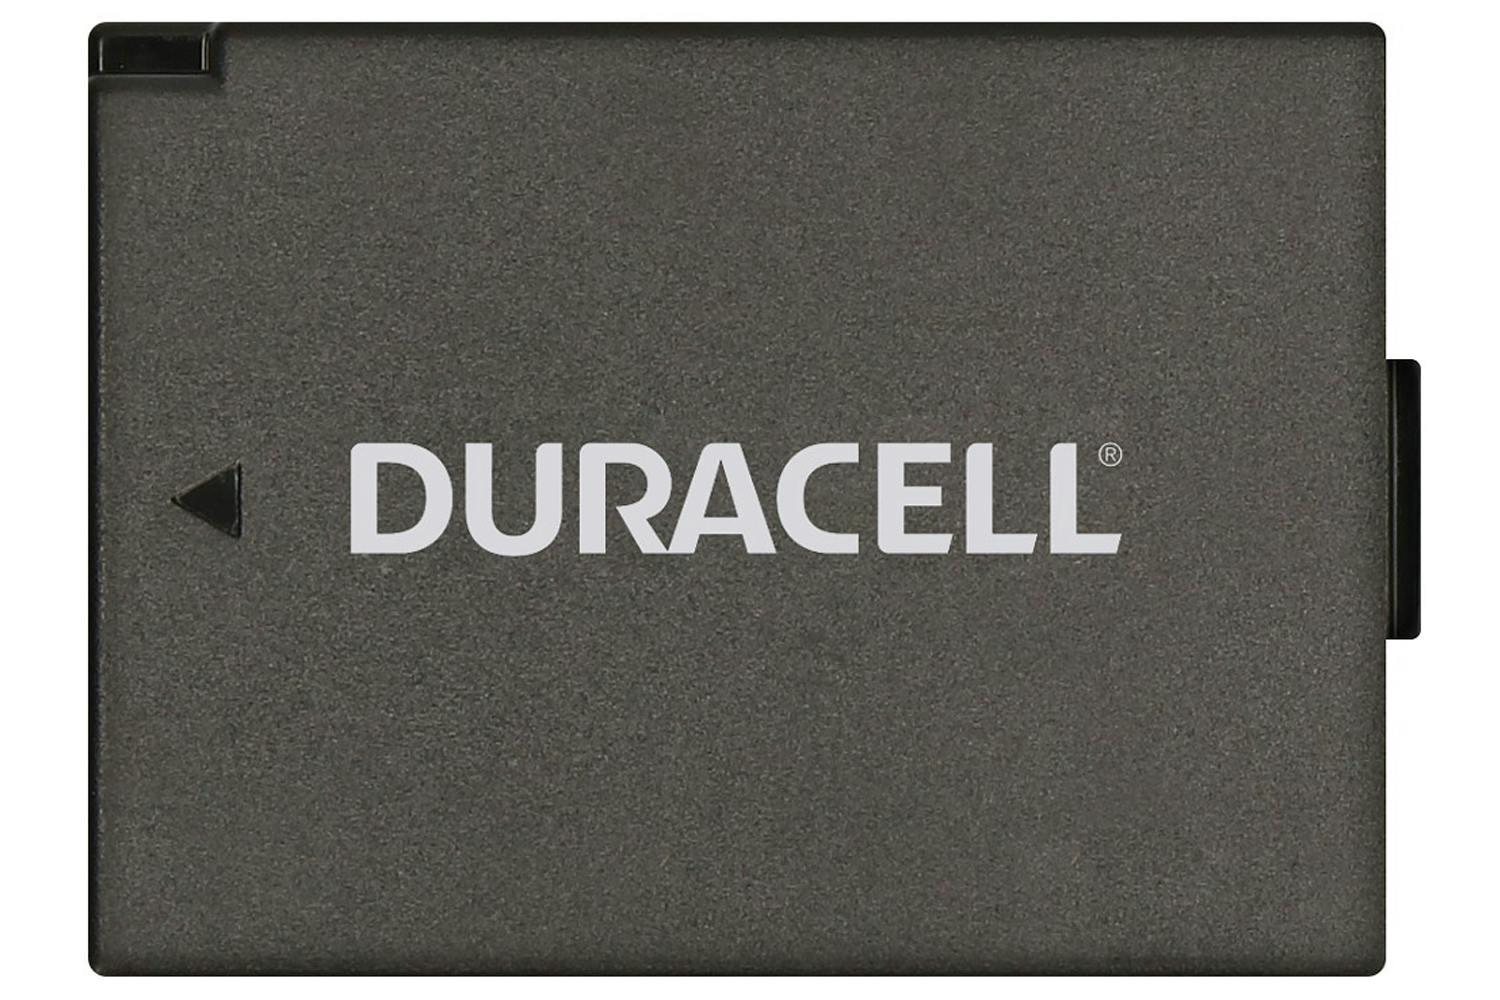 Duracell Camera Battery 7.4V 1020mAh